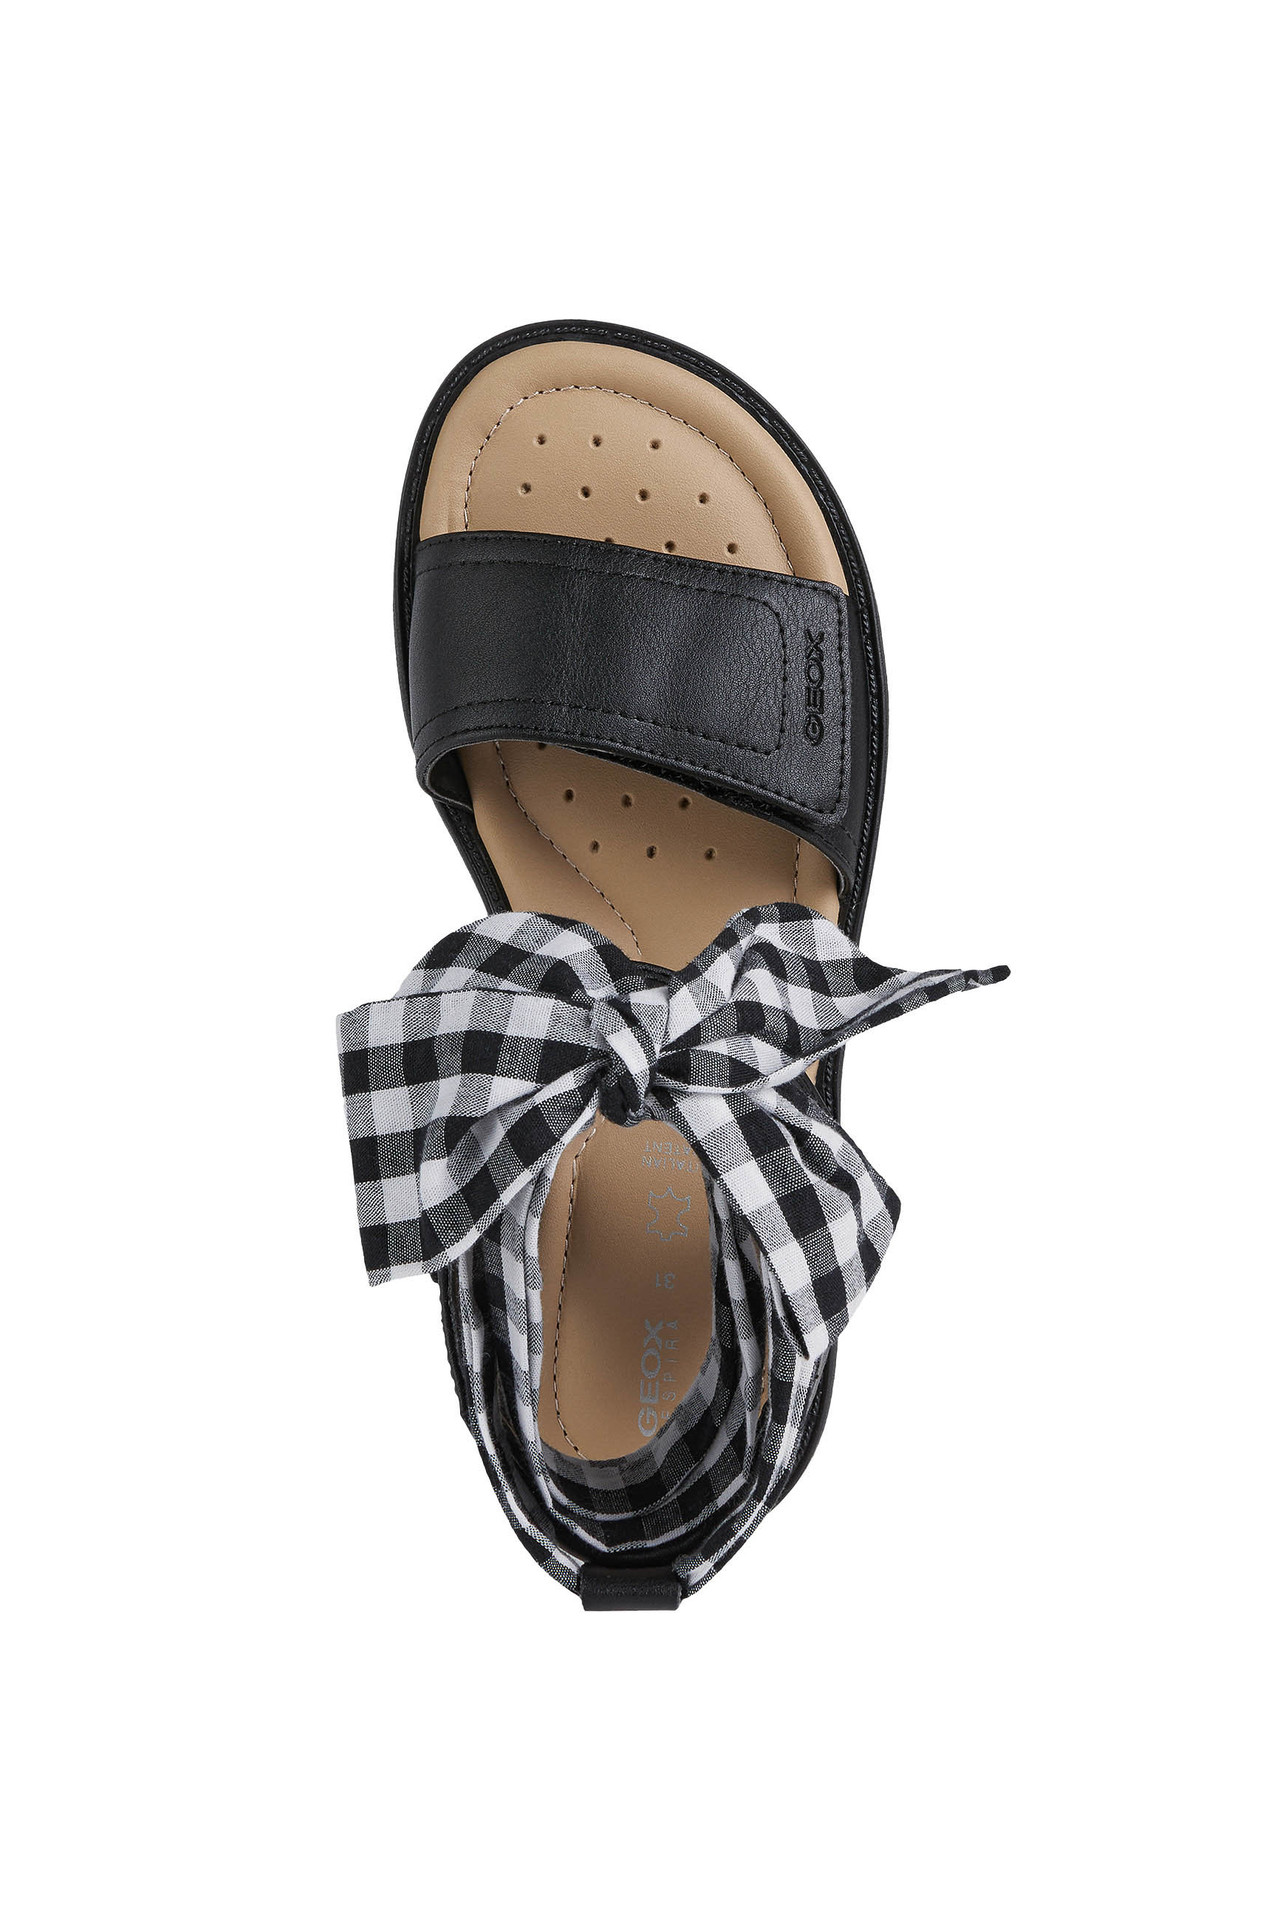 Обувь, Босоножки для девочки J Sandal Starbluah Girl GEOX (черный)931280, фото 5